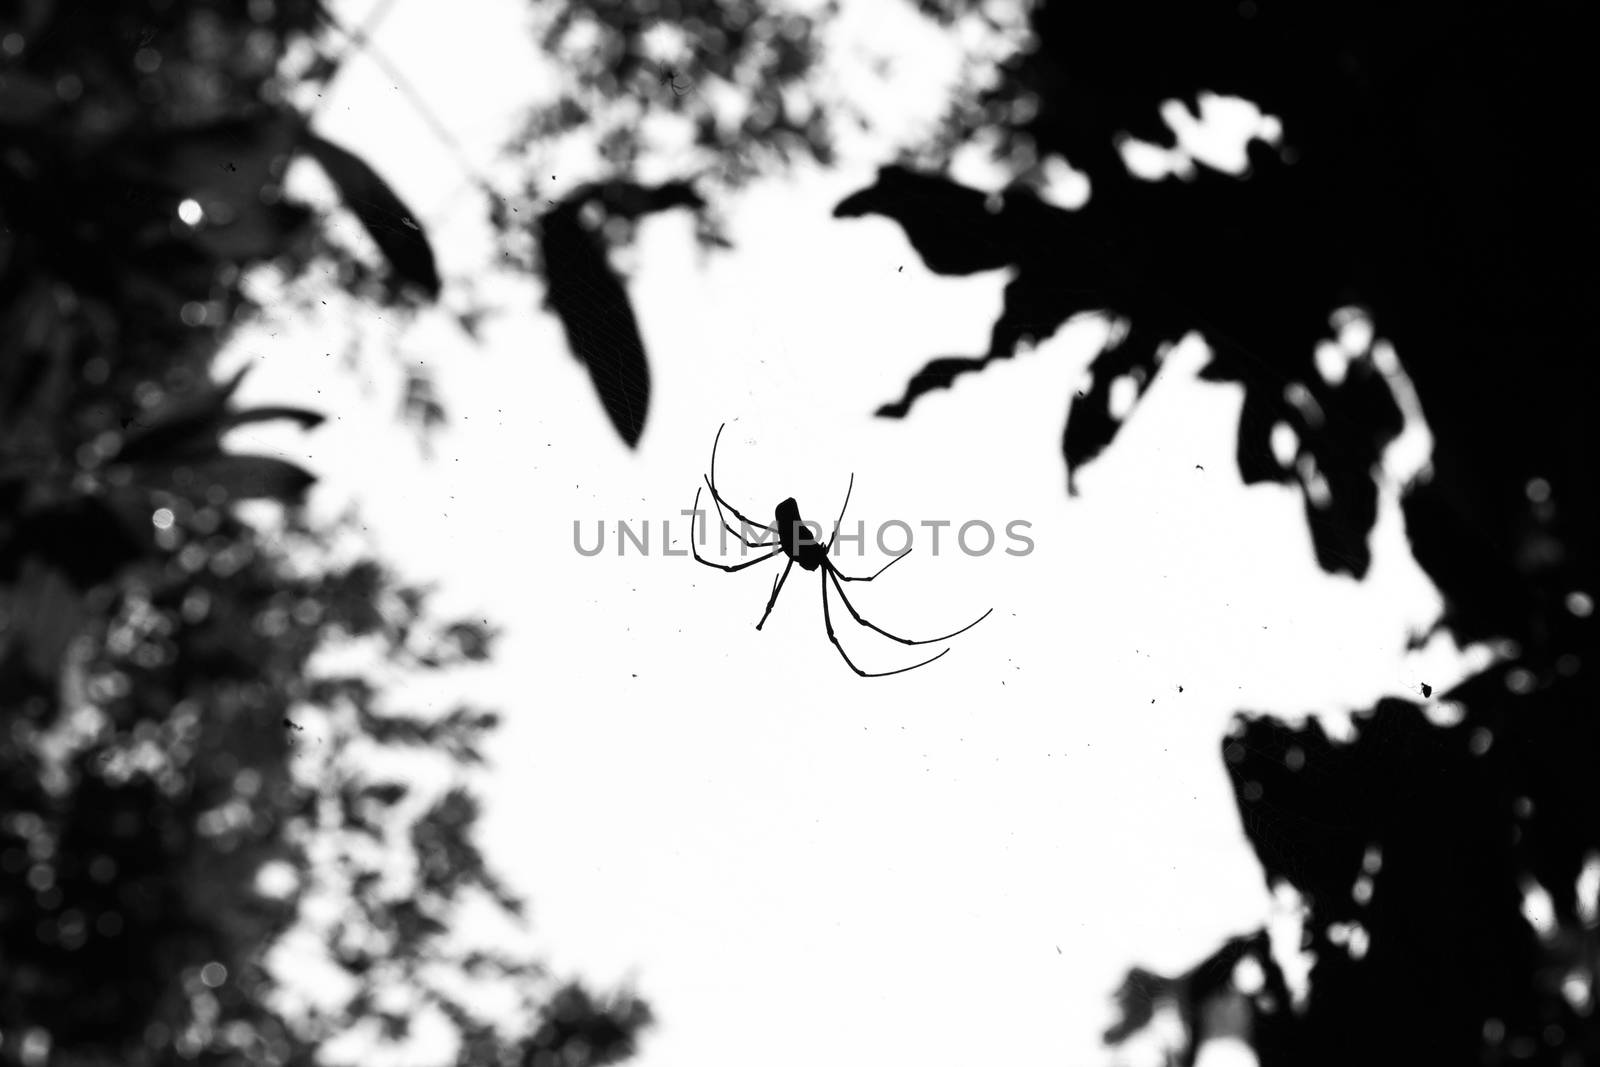 Spider web by wyoosumran